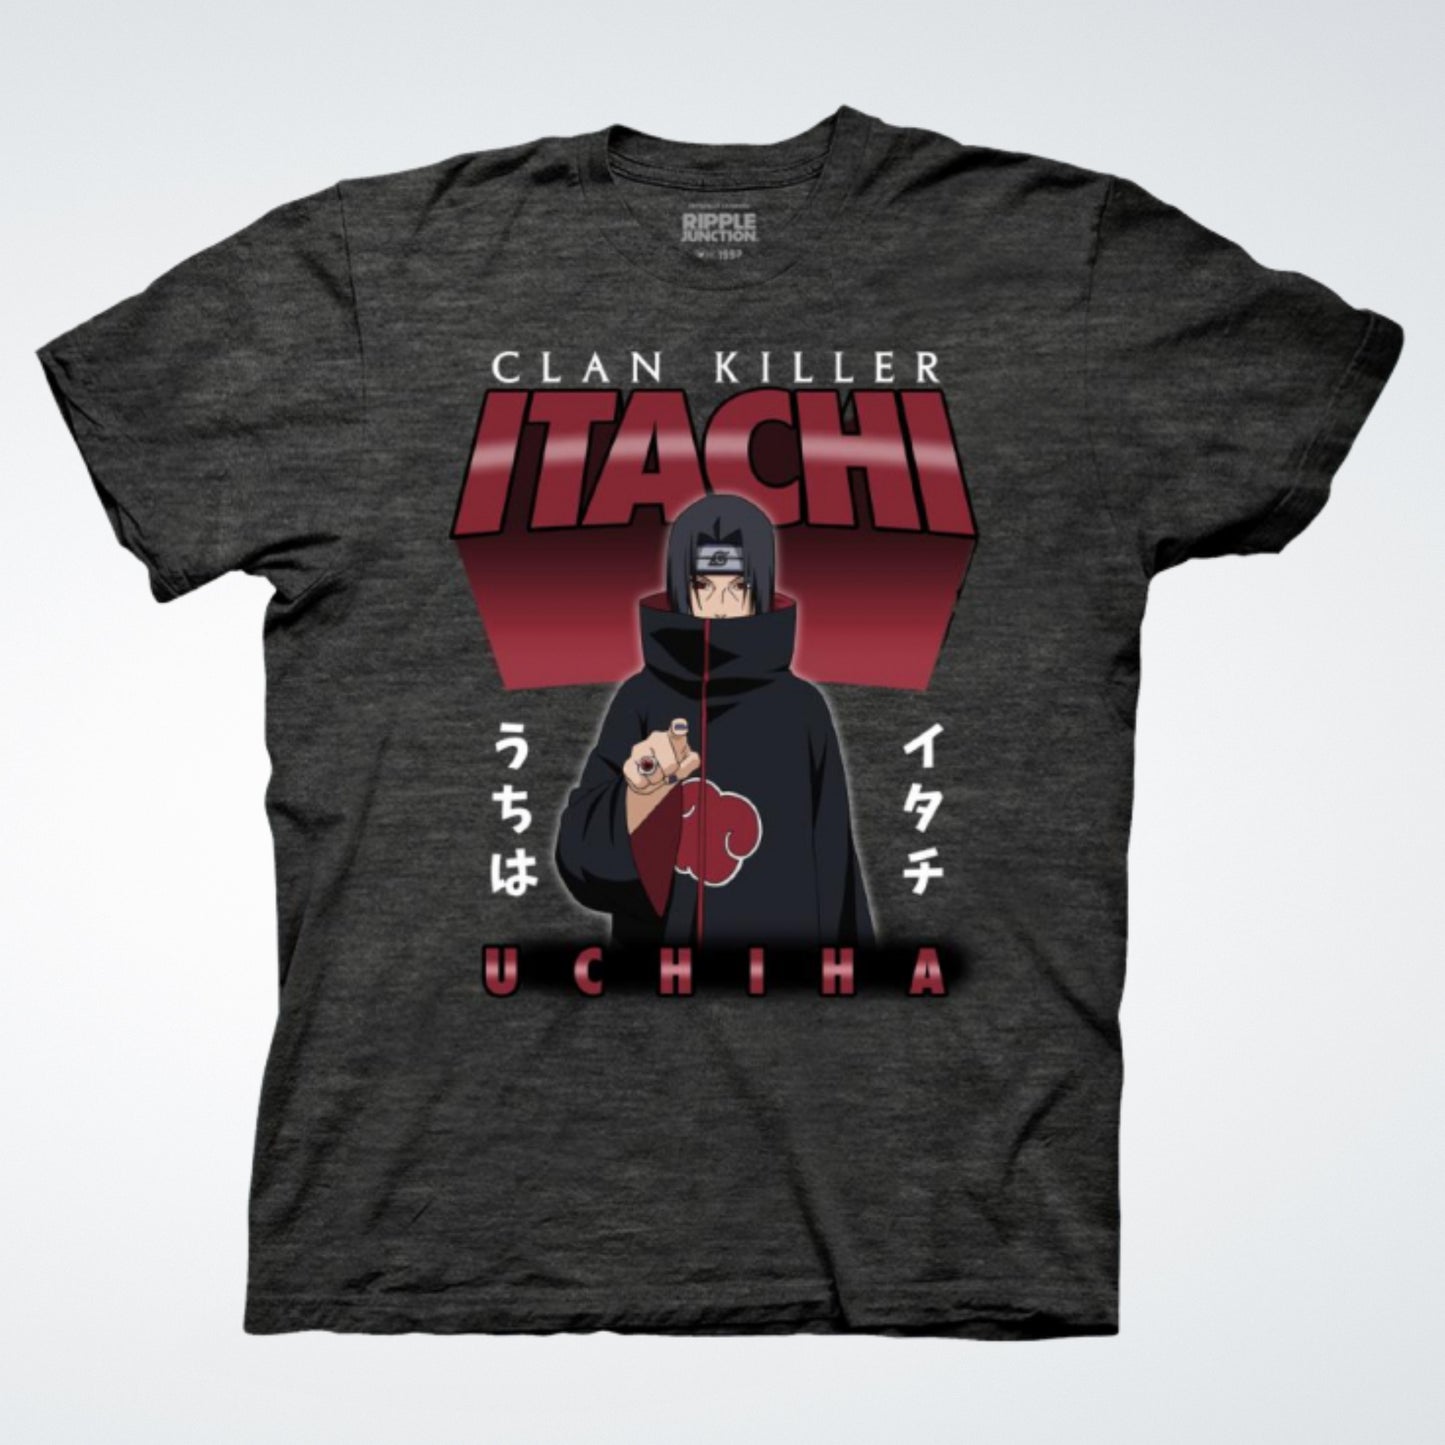 Itachi Uchiha "Clan Killer" (Naruto Shippuden) Heather Grey Unisex Shirt